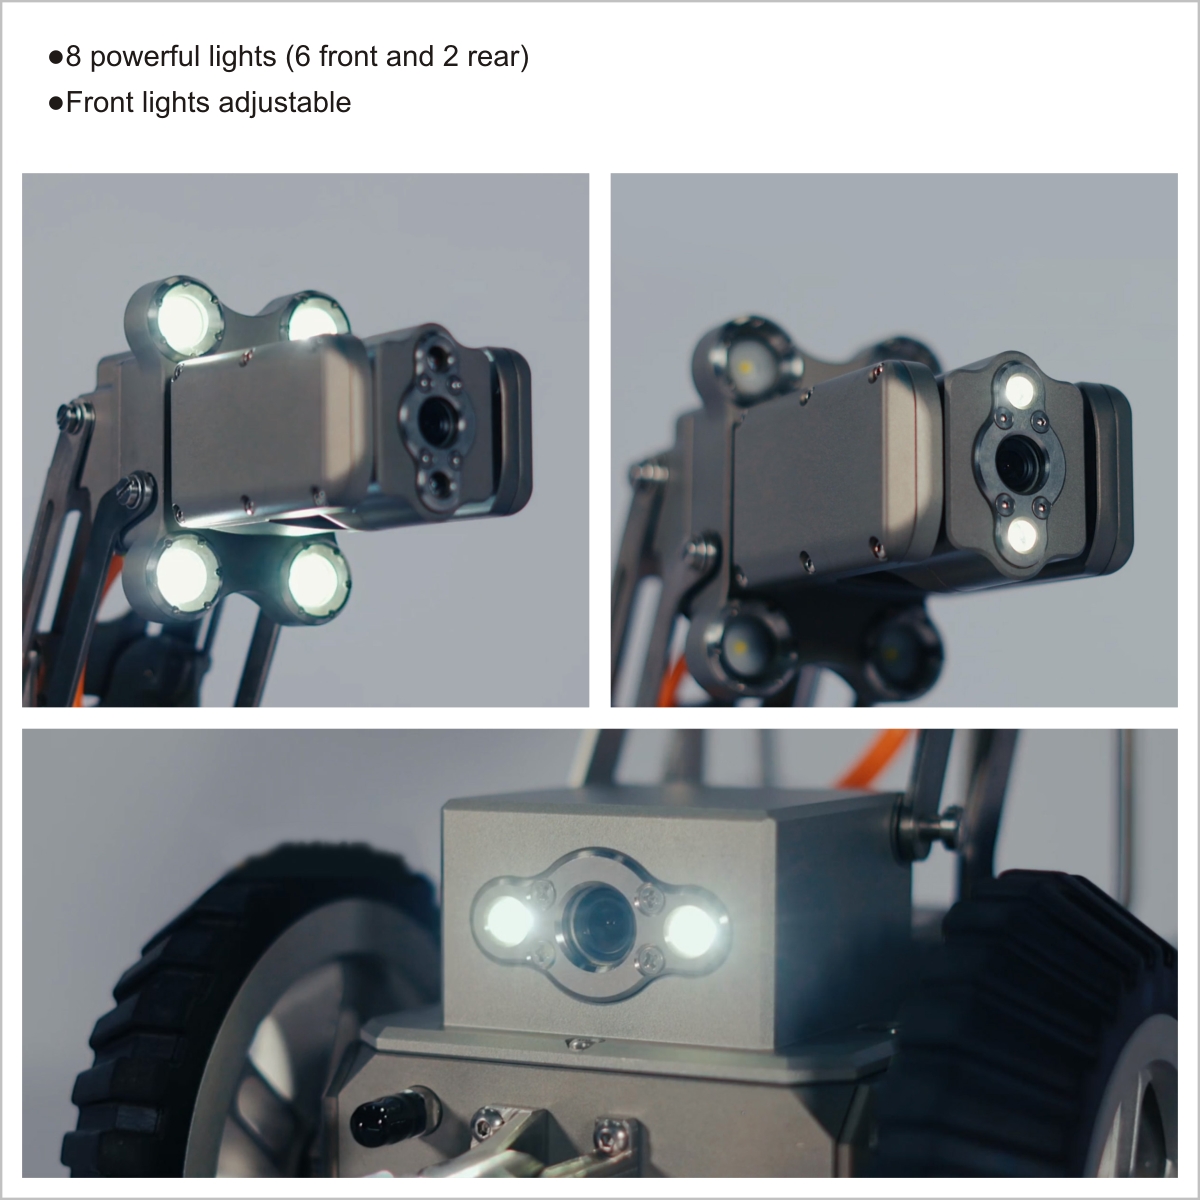 Robot-noi-soi-kiem-tra-duong-ong-crawler-p1